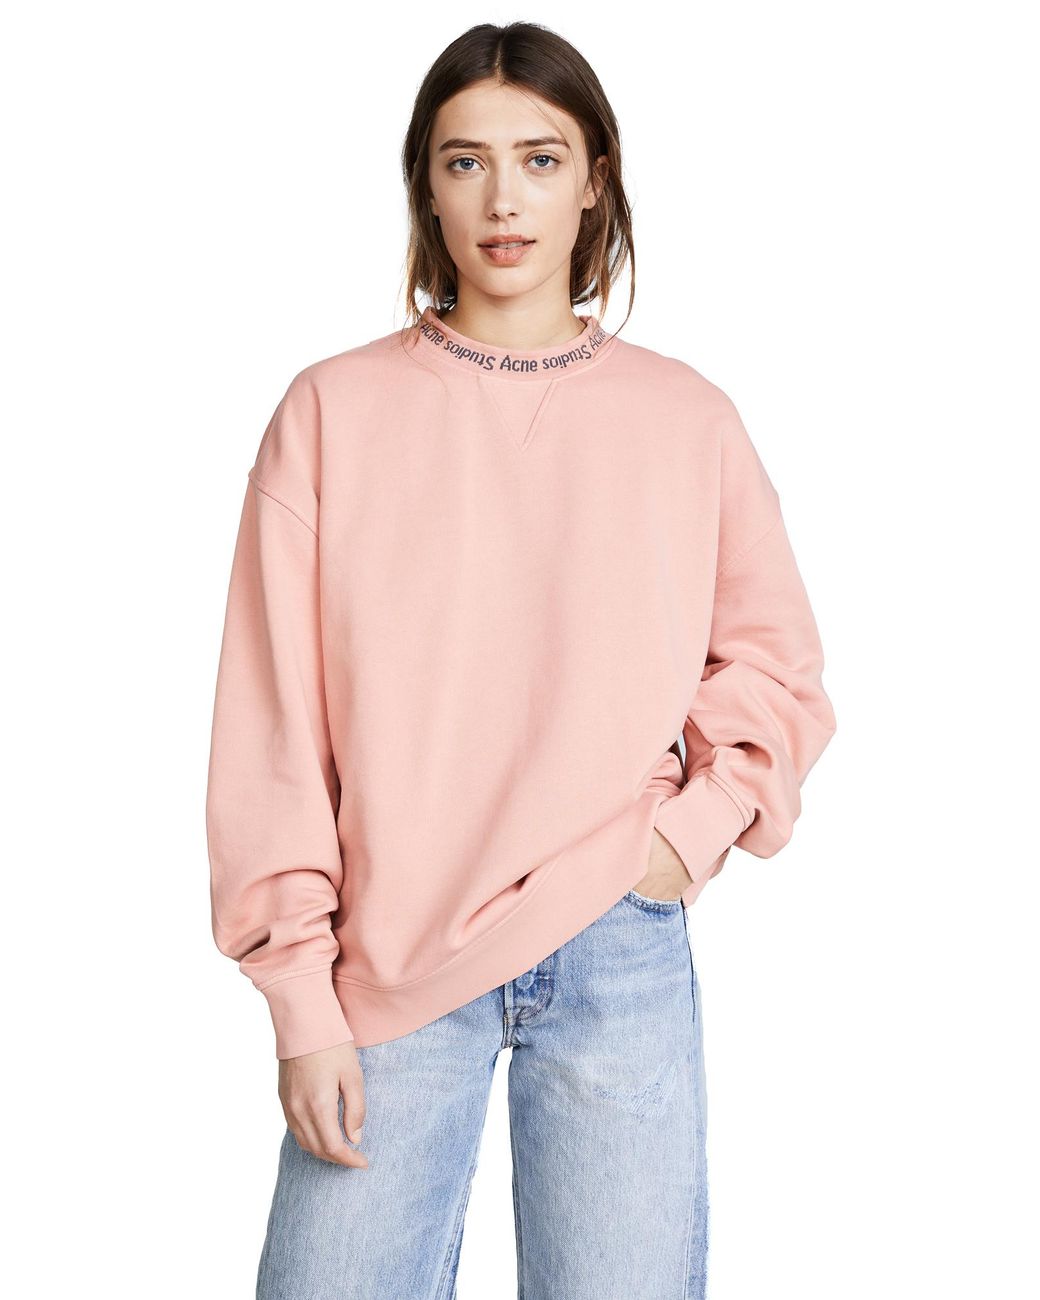 Acne Studios Women's Pink Yana Rib Pullover Sweatshirt